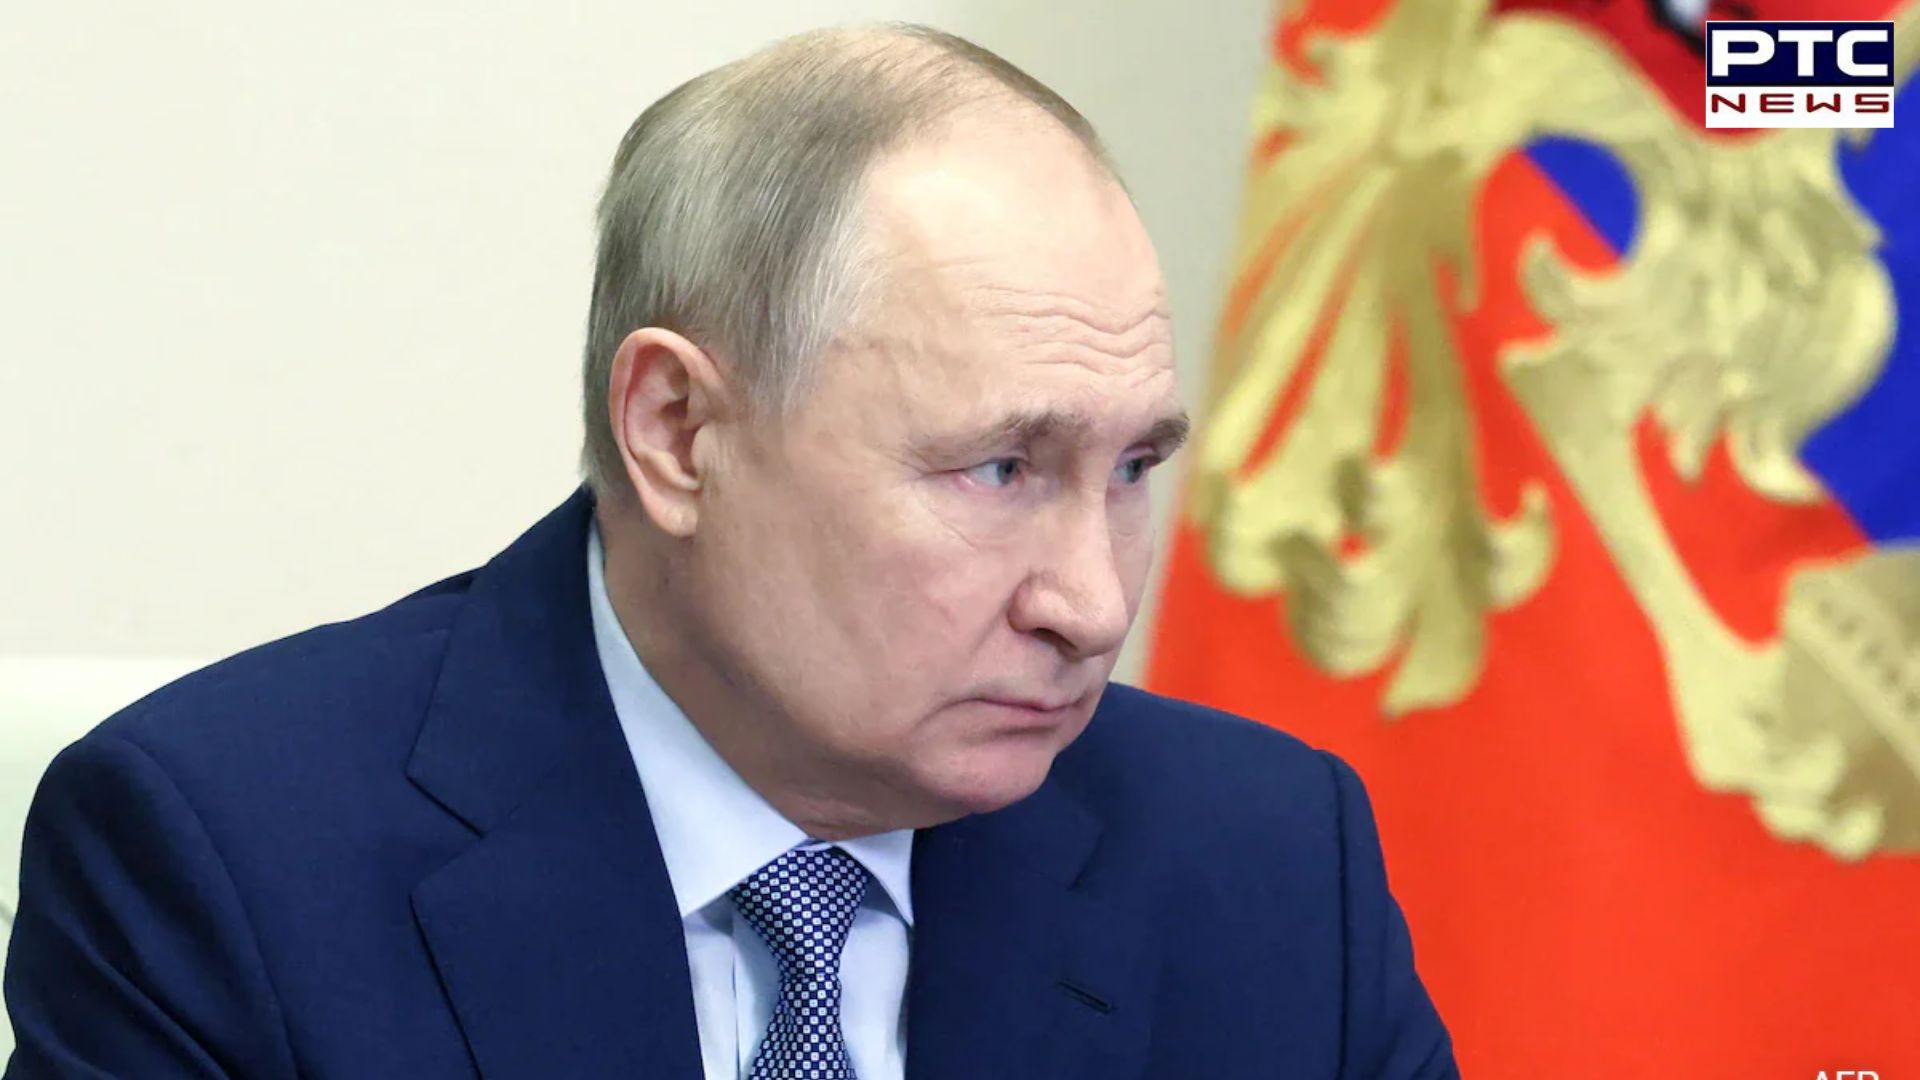 Moscow terror attack: 28 bodies discovered in restroom; Vladimir Putin alleges 'Ukraine escape route'